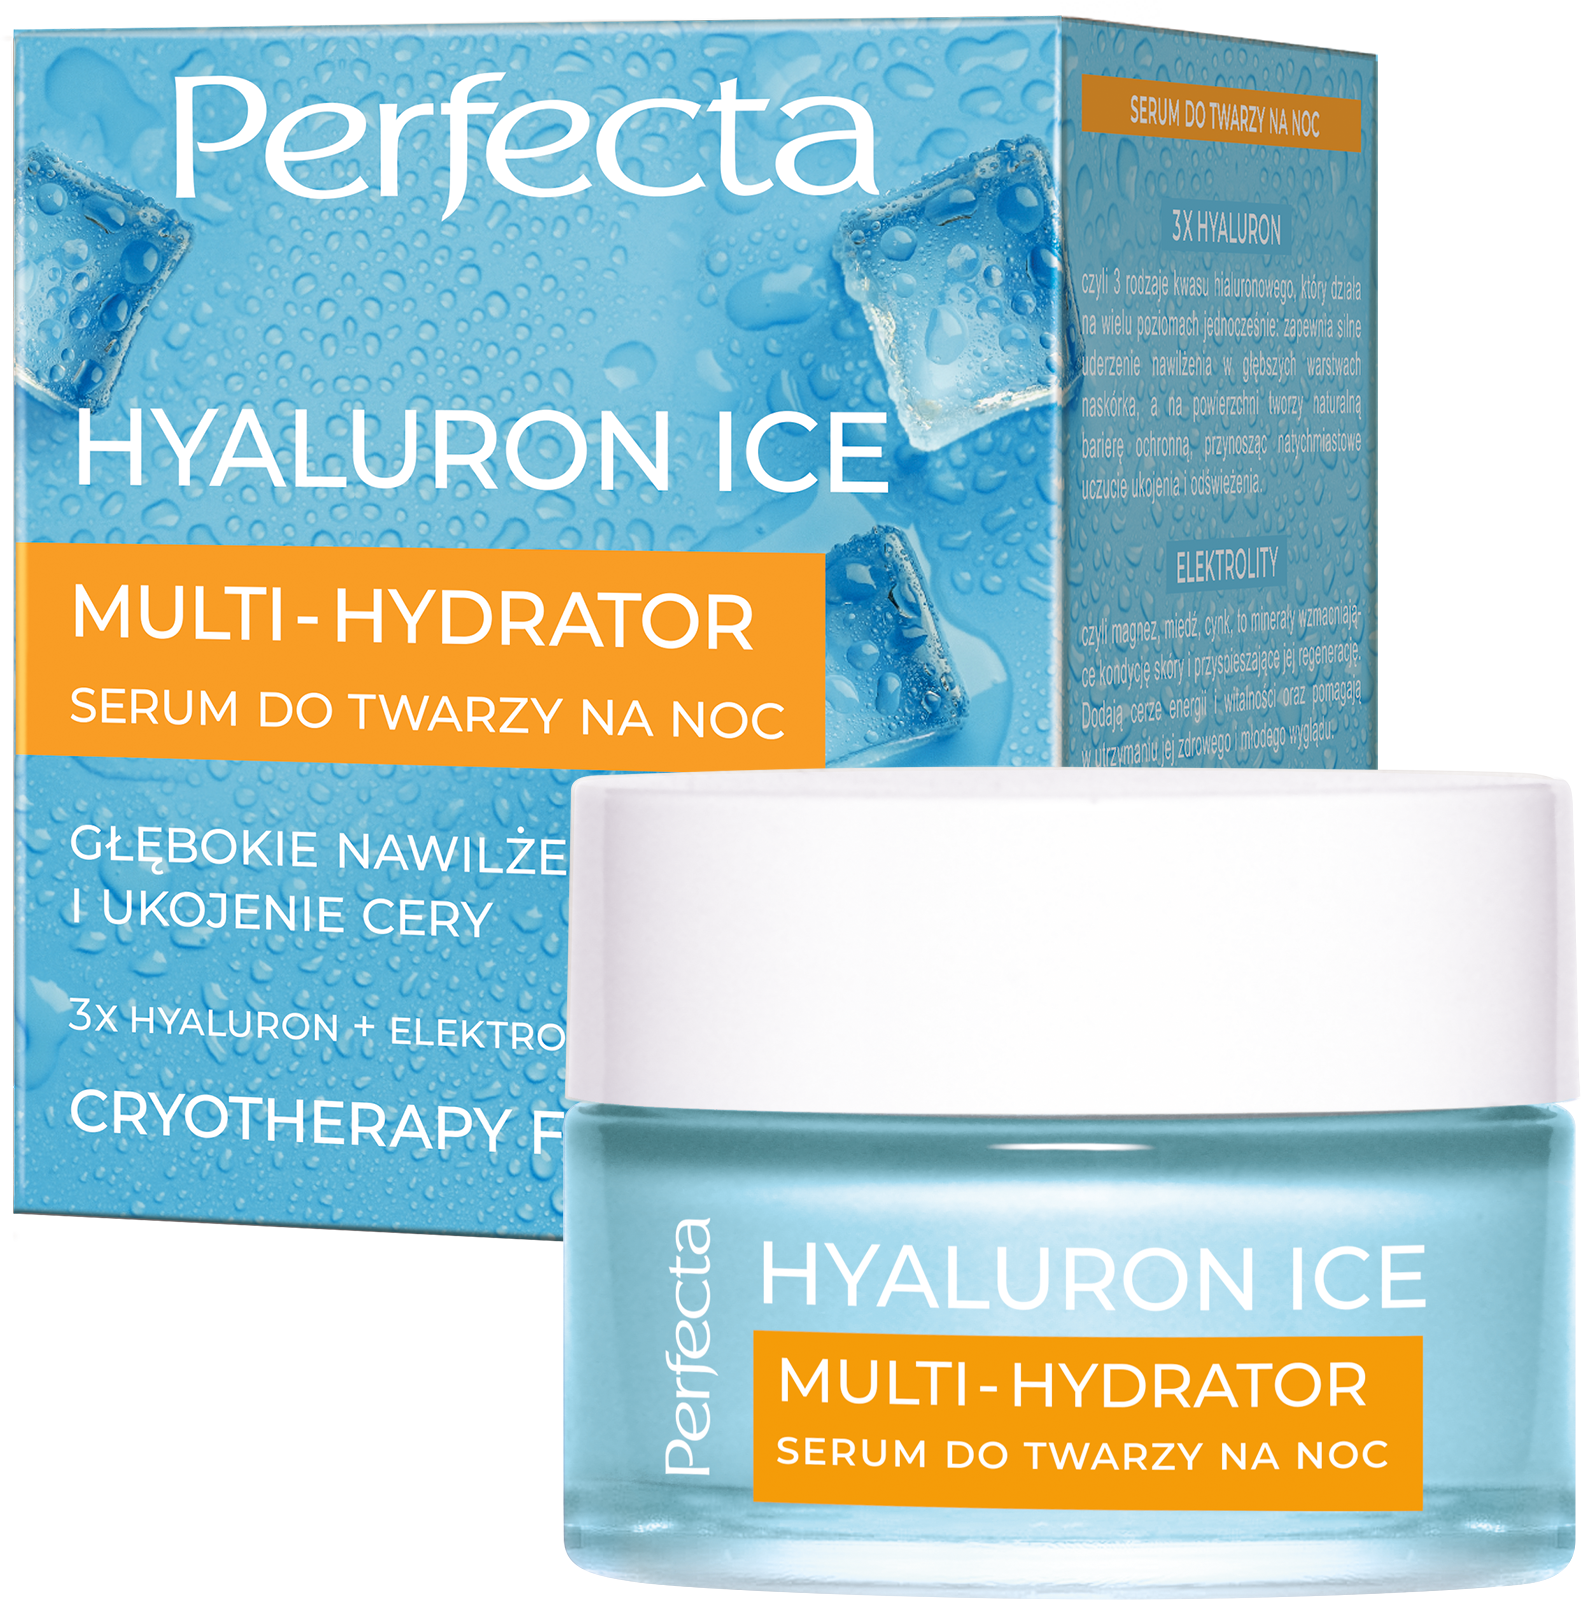 PERFECTA HYALURON ICE Multi-Hydrator Serum do twarzy na noc